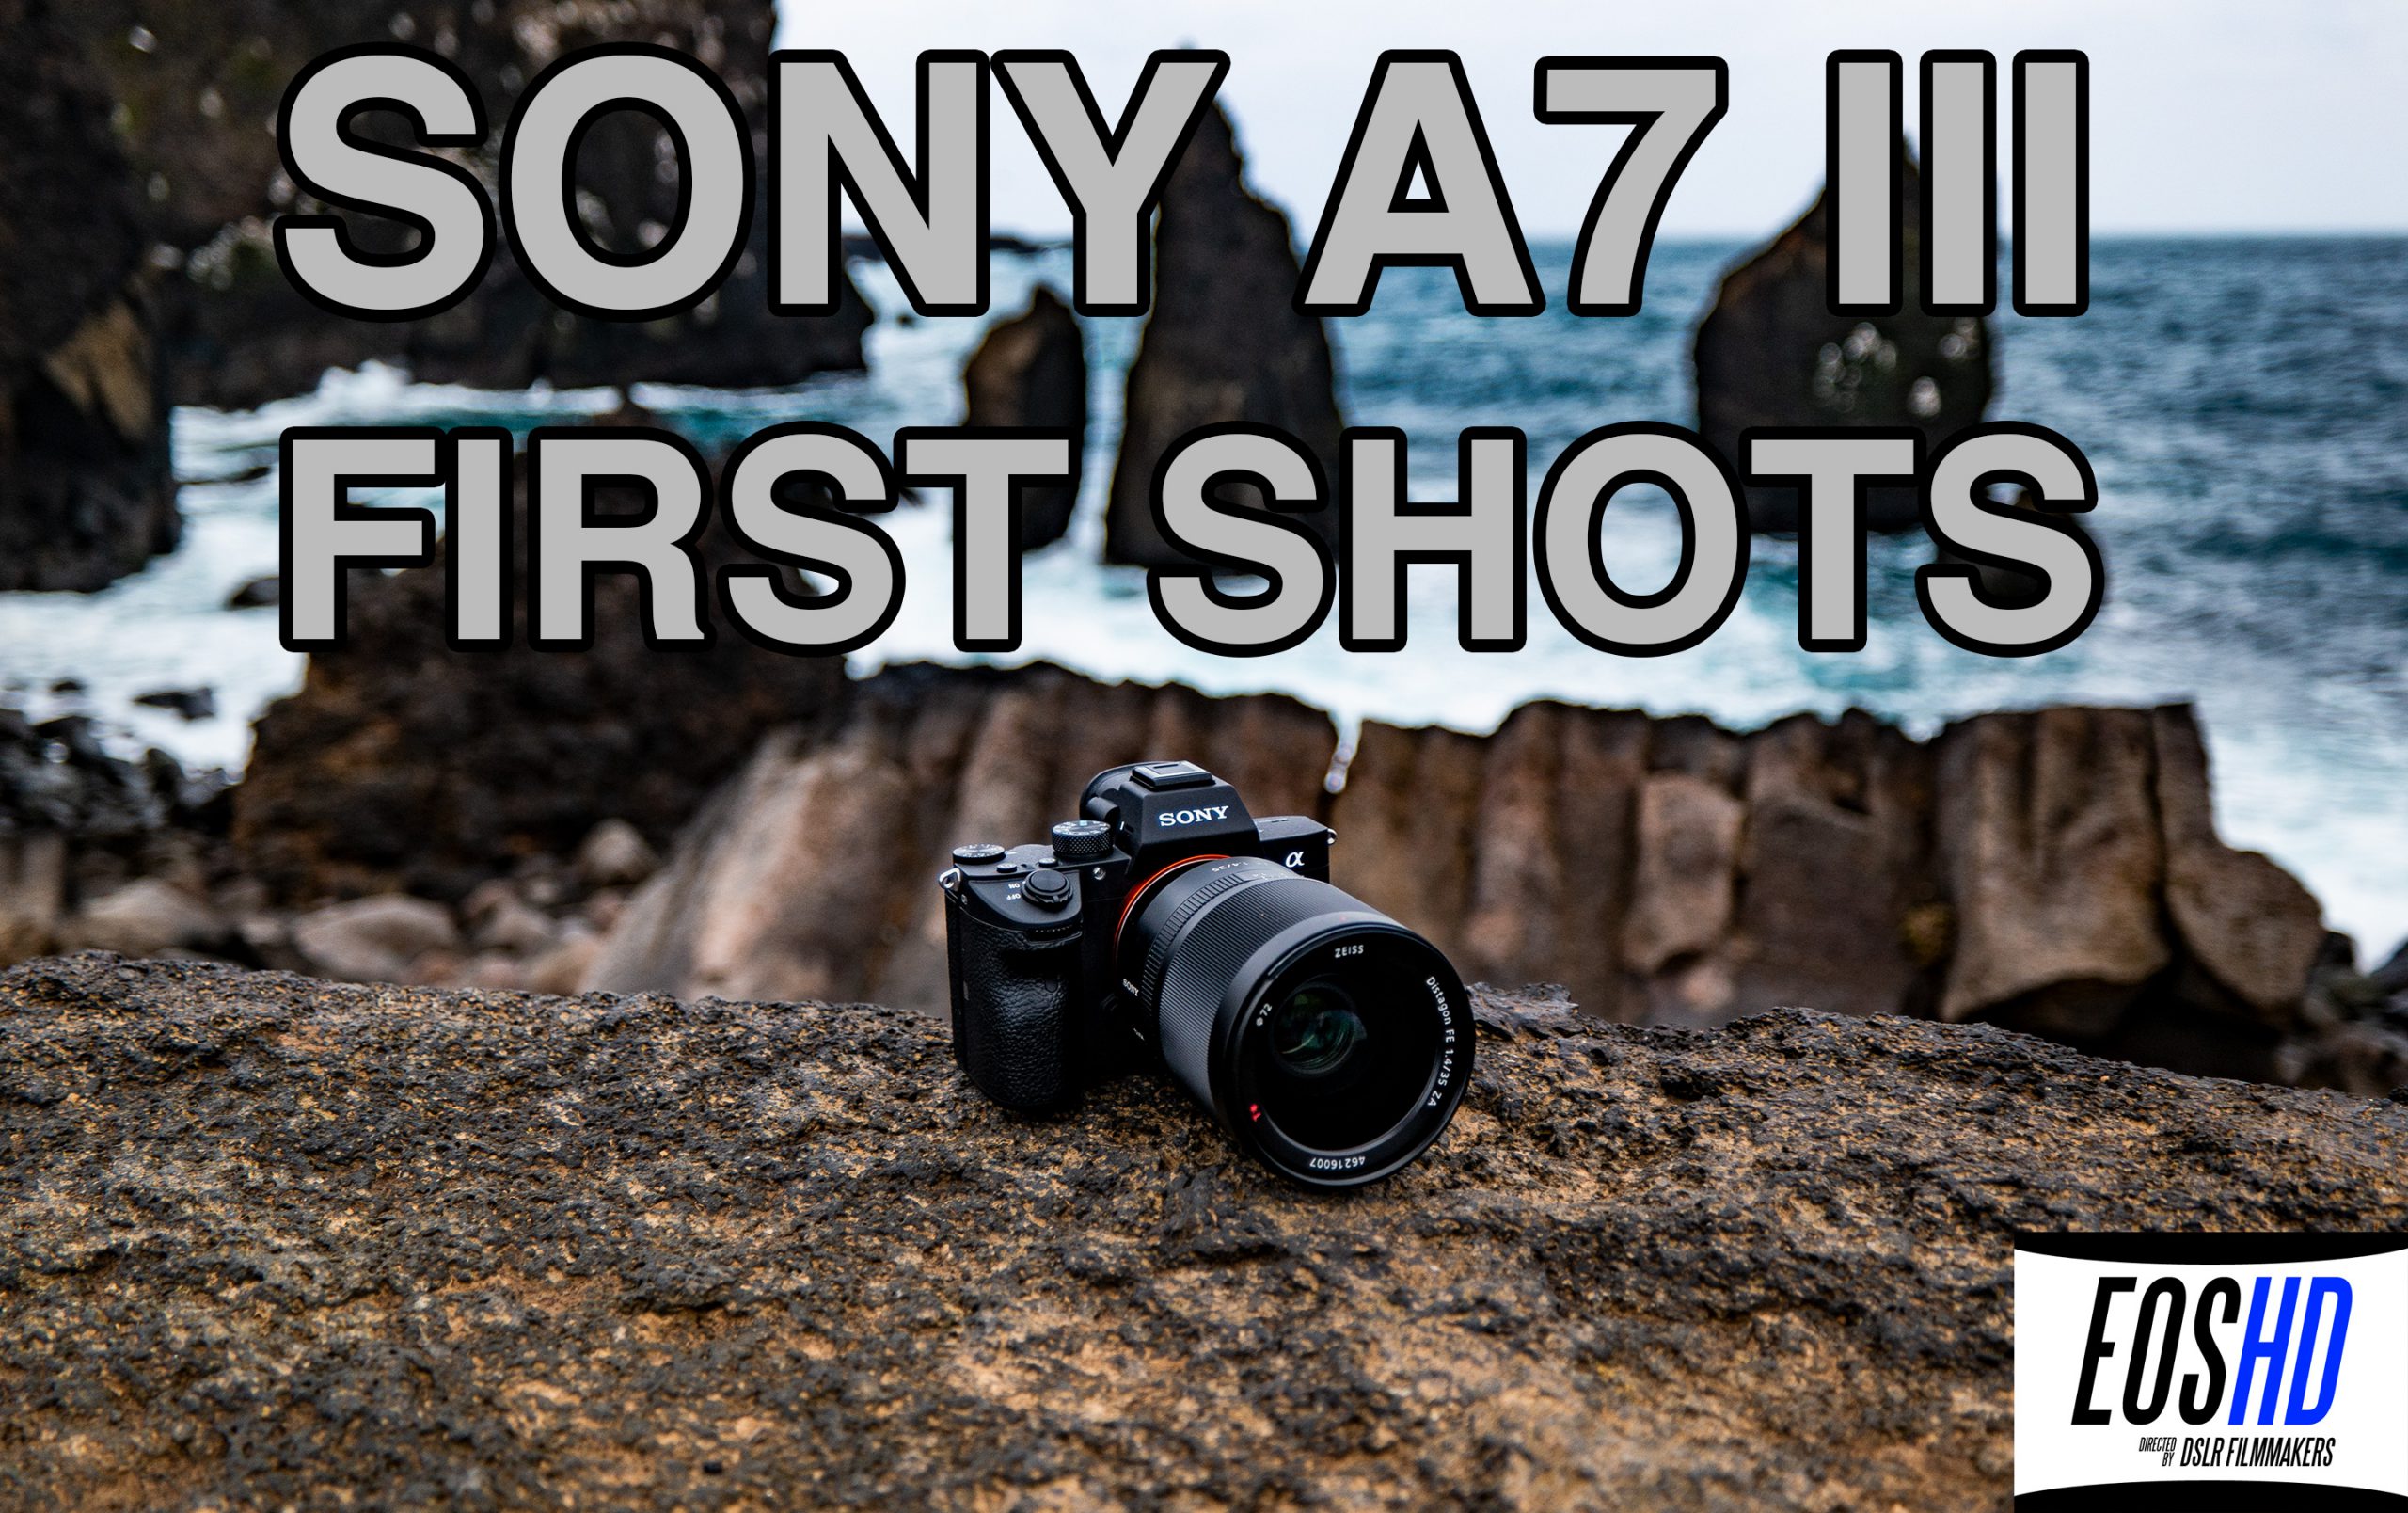 Is the Original Sony a7 Still a Good Camera?